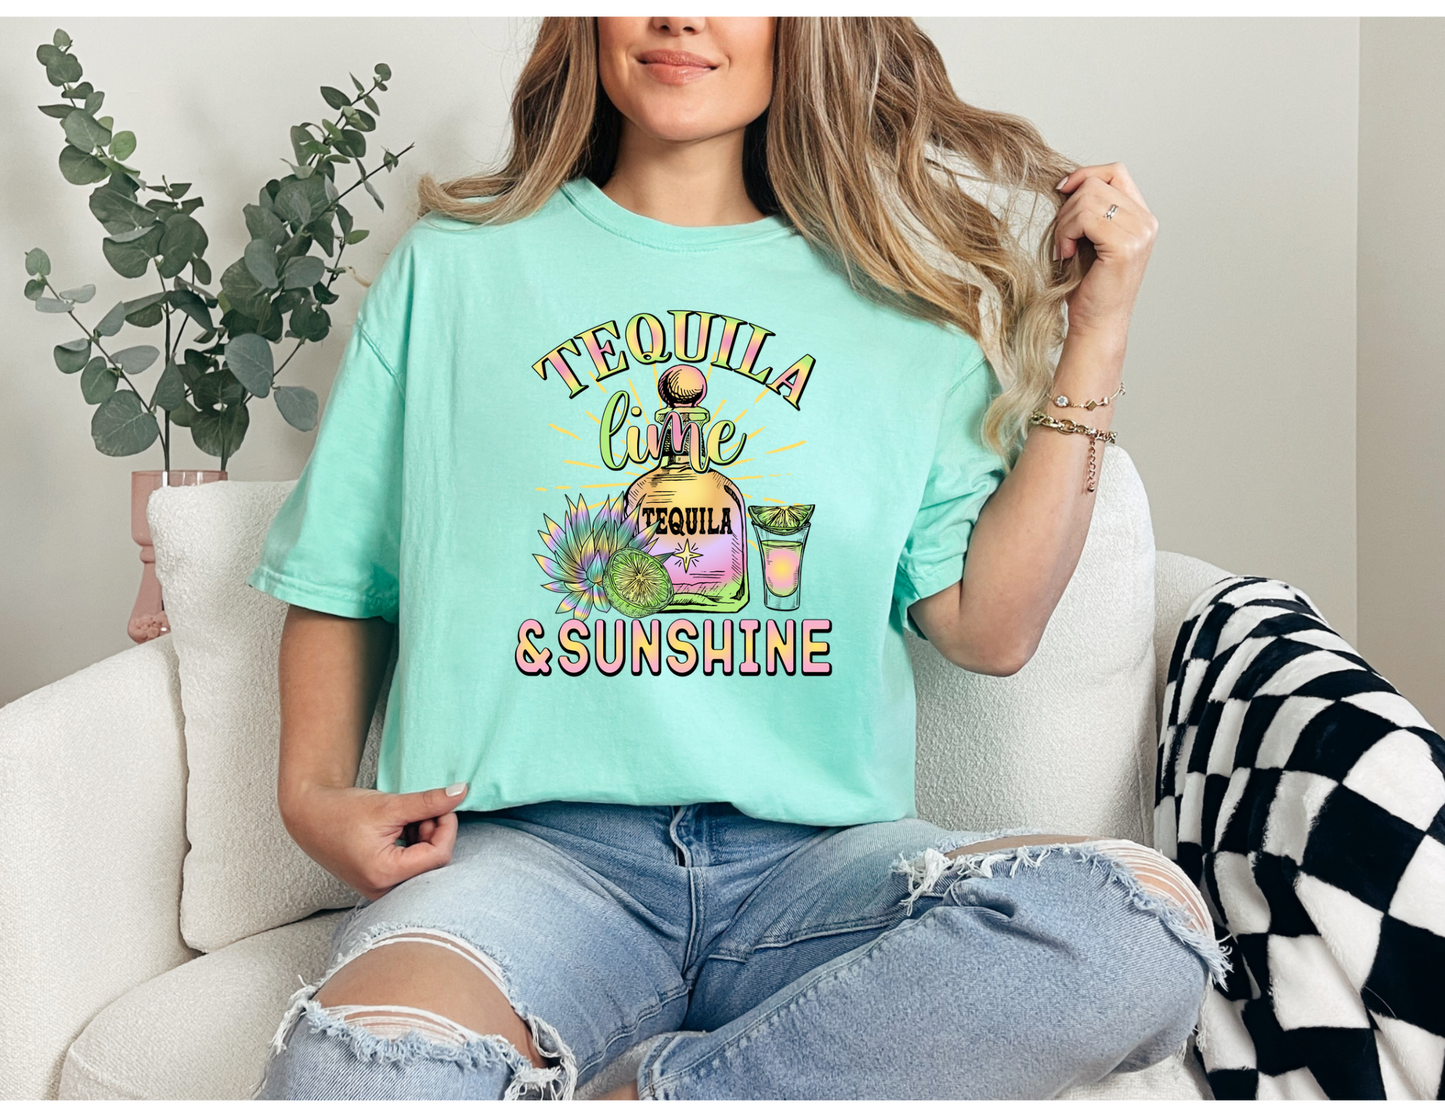 Tequila Lime Sunshine Shirt